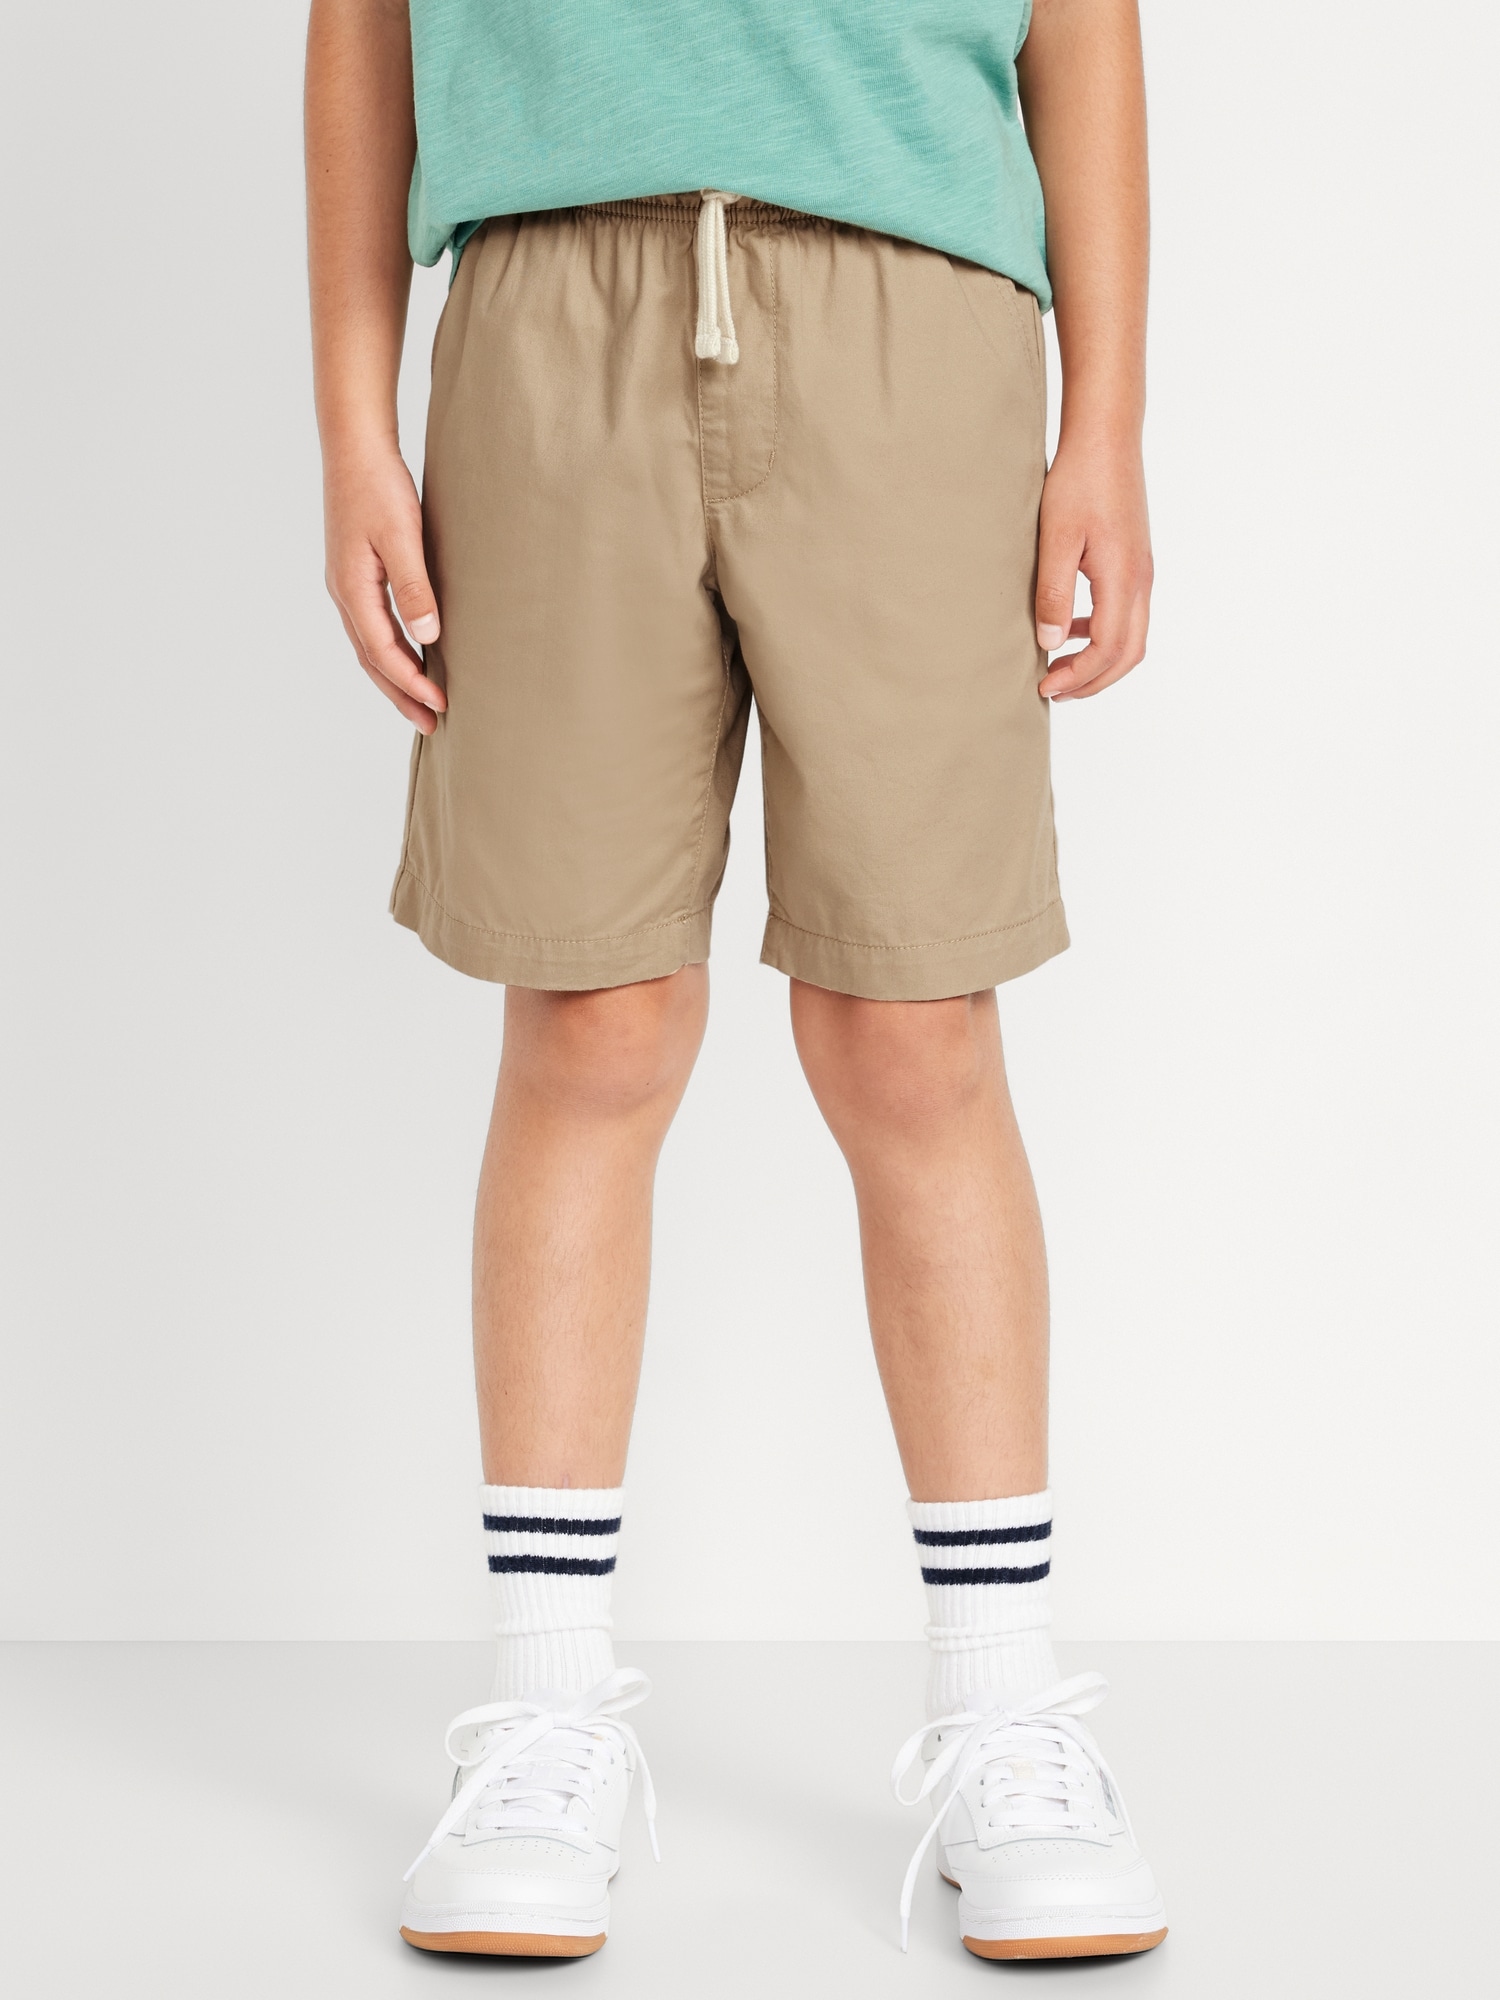 Twill Jogger Shorts for Boys (At Knee)